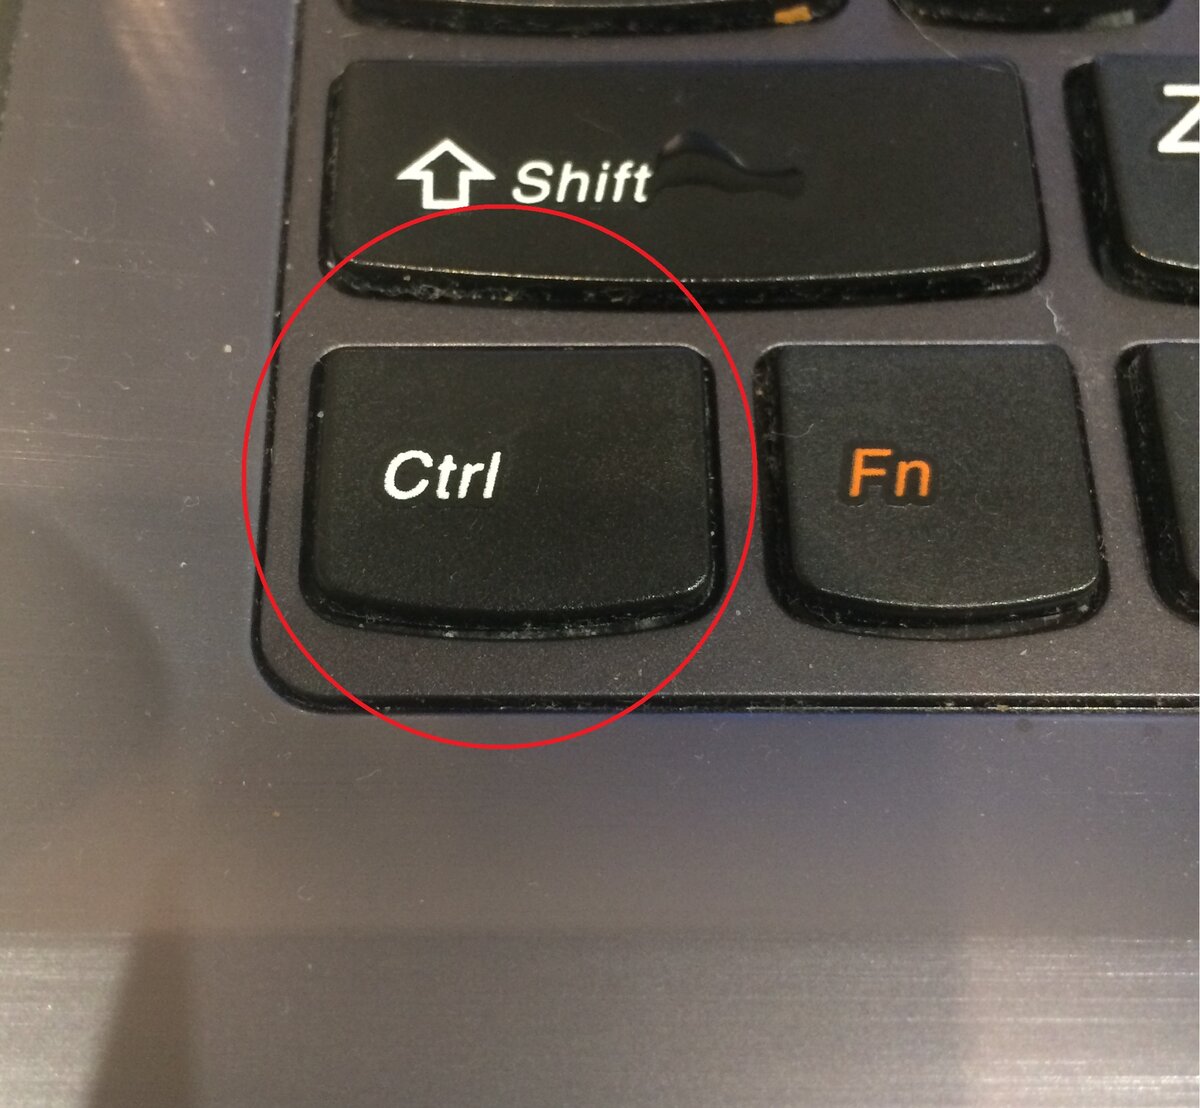 Какая клавиша контр на клавиатуре фото